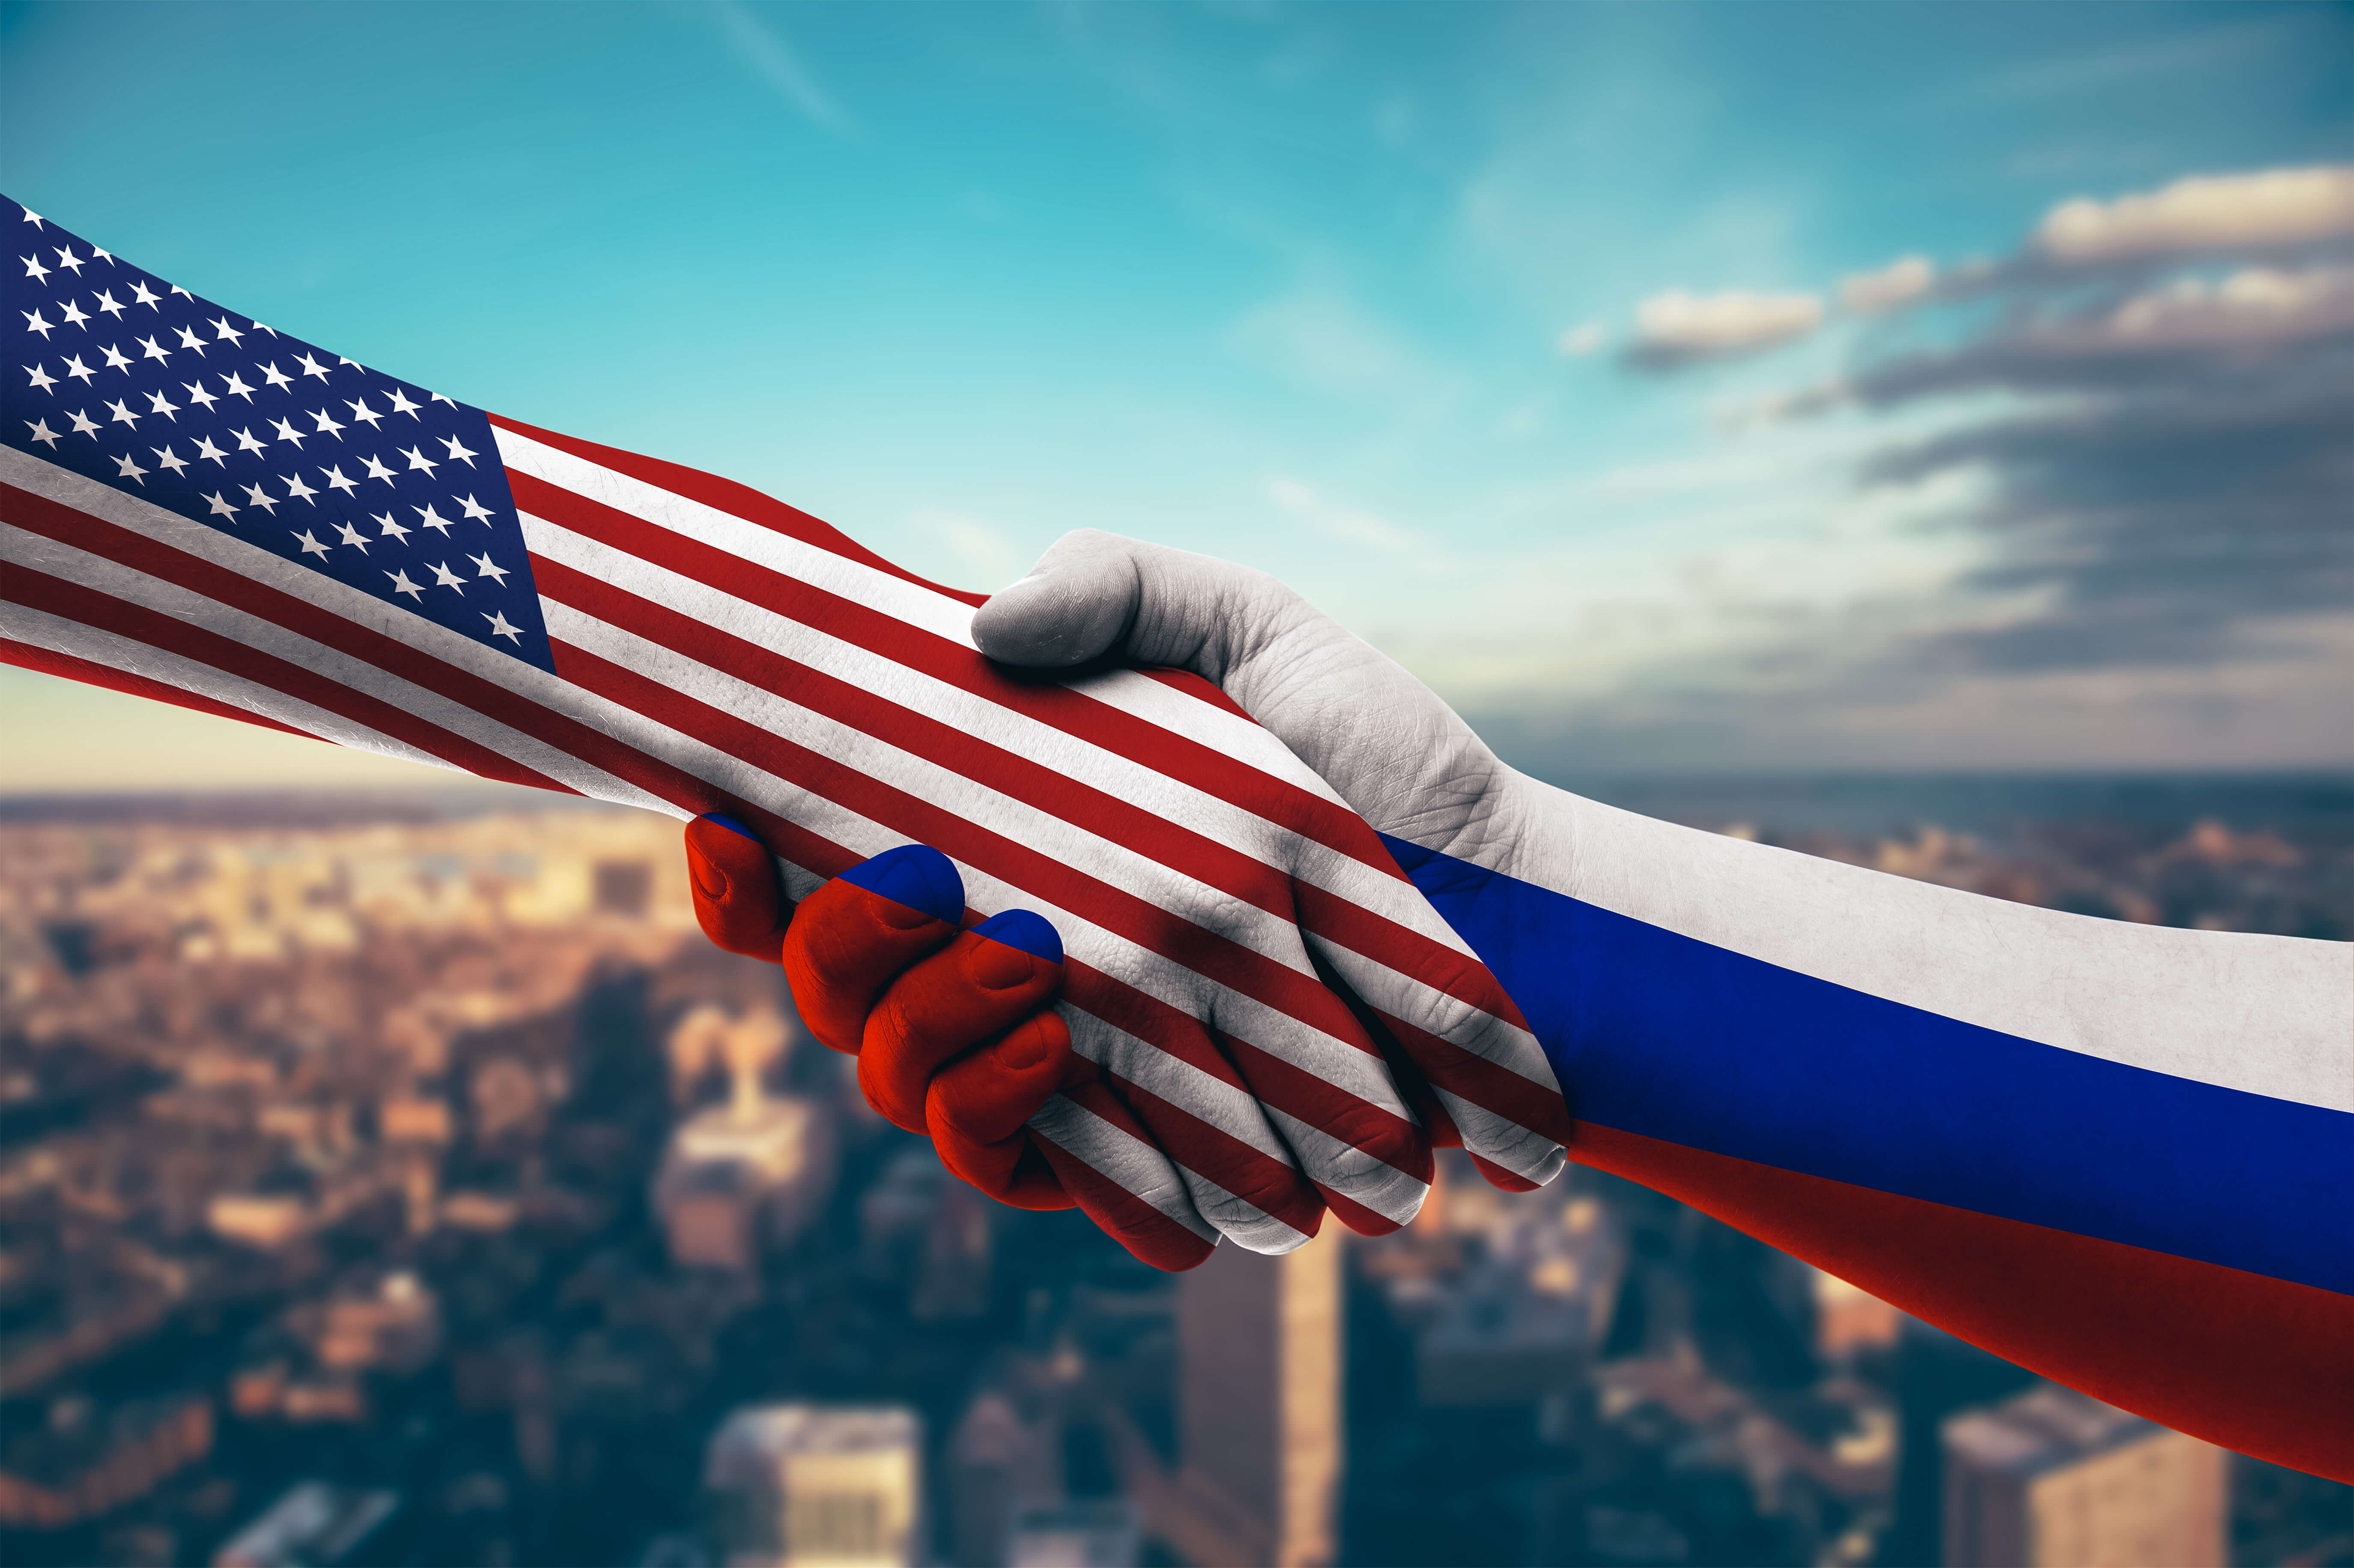 FinanceBrokerage - Economic News The U.S. offers 200 ventilators to Russia after its President, Vladimir Putin called the U.S. President asking for help.